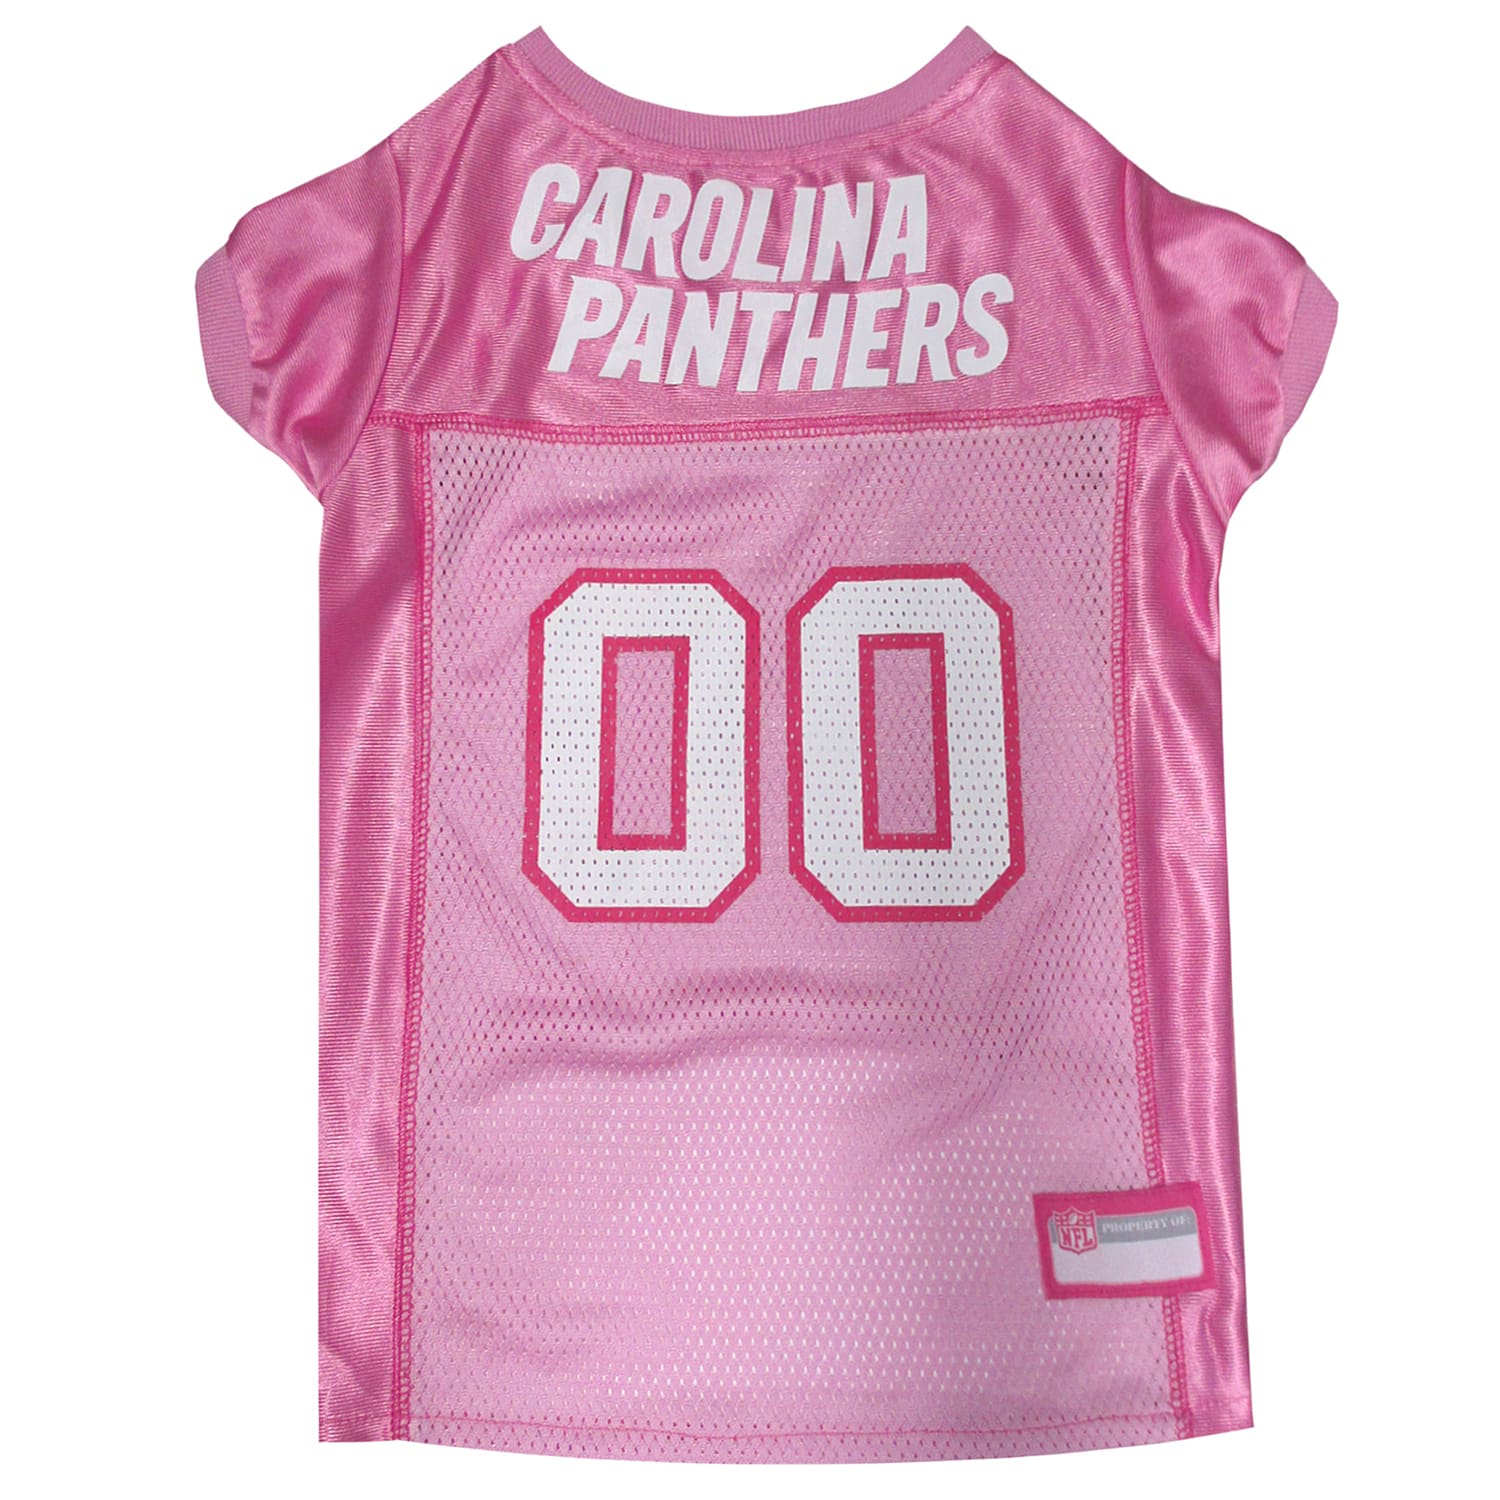 pink panthers jersey